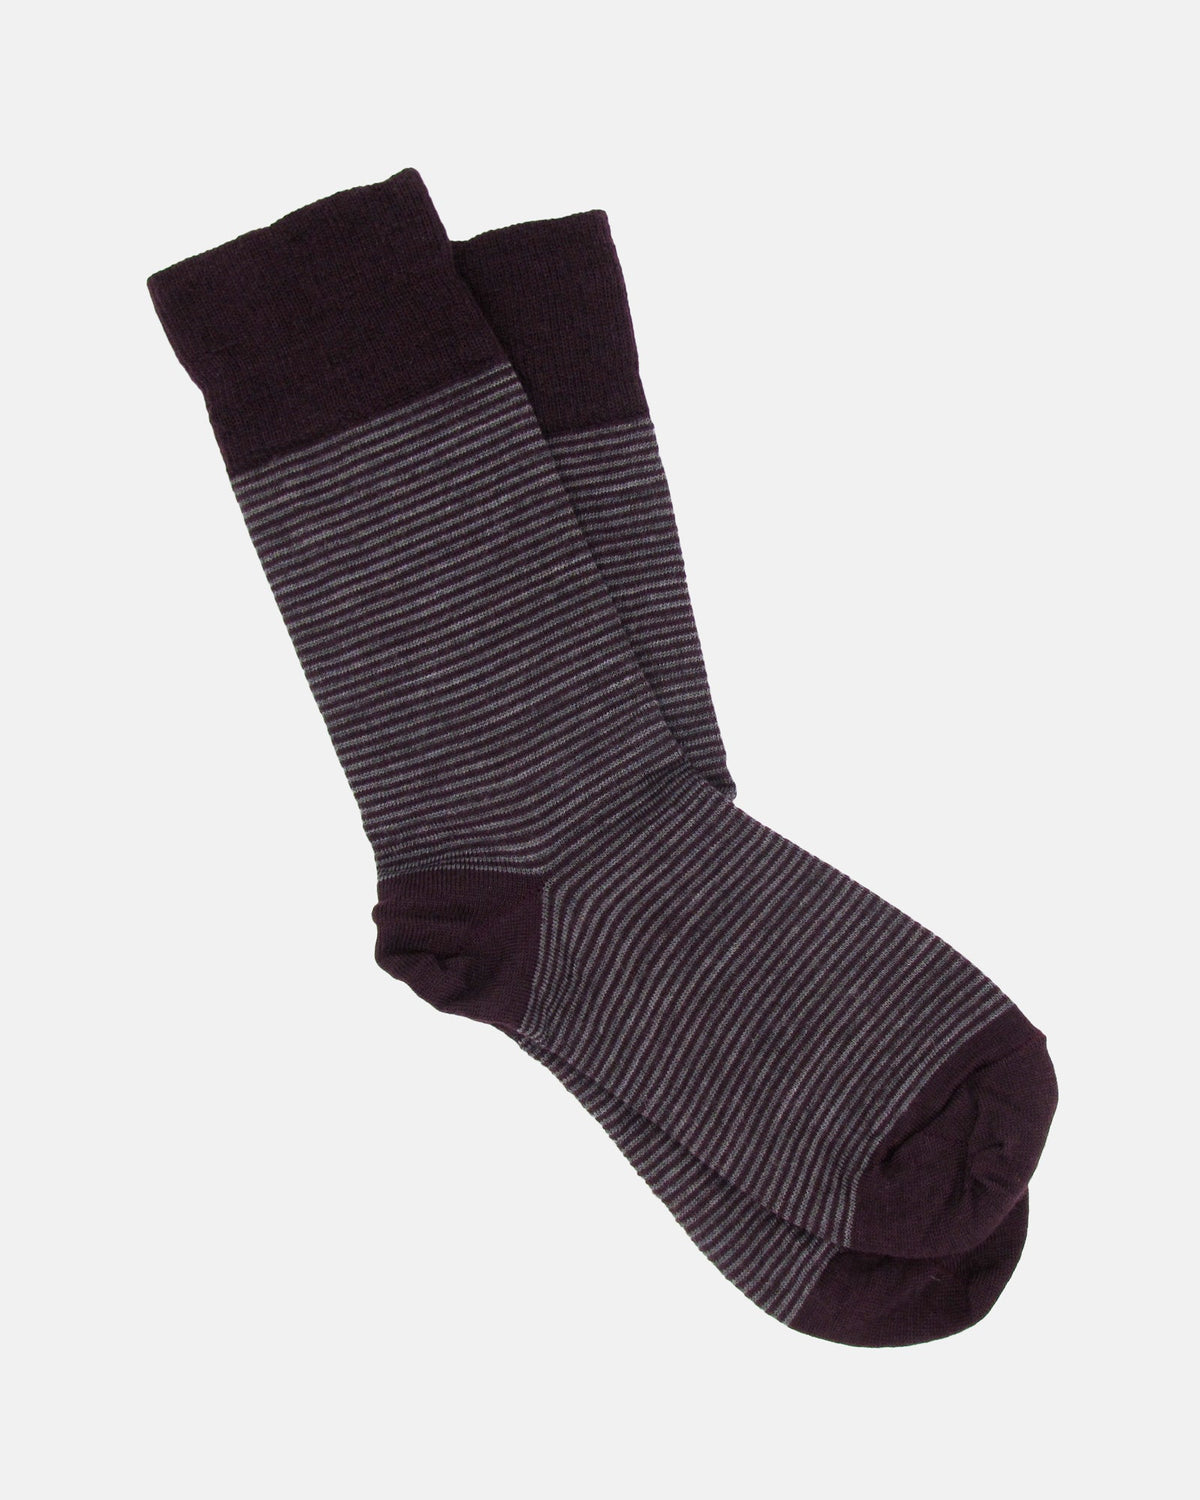 Pencil Stripe Wool Socks - Aubergine/Mid Grey - BRIT LOCKER